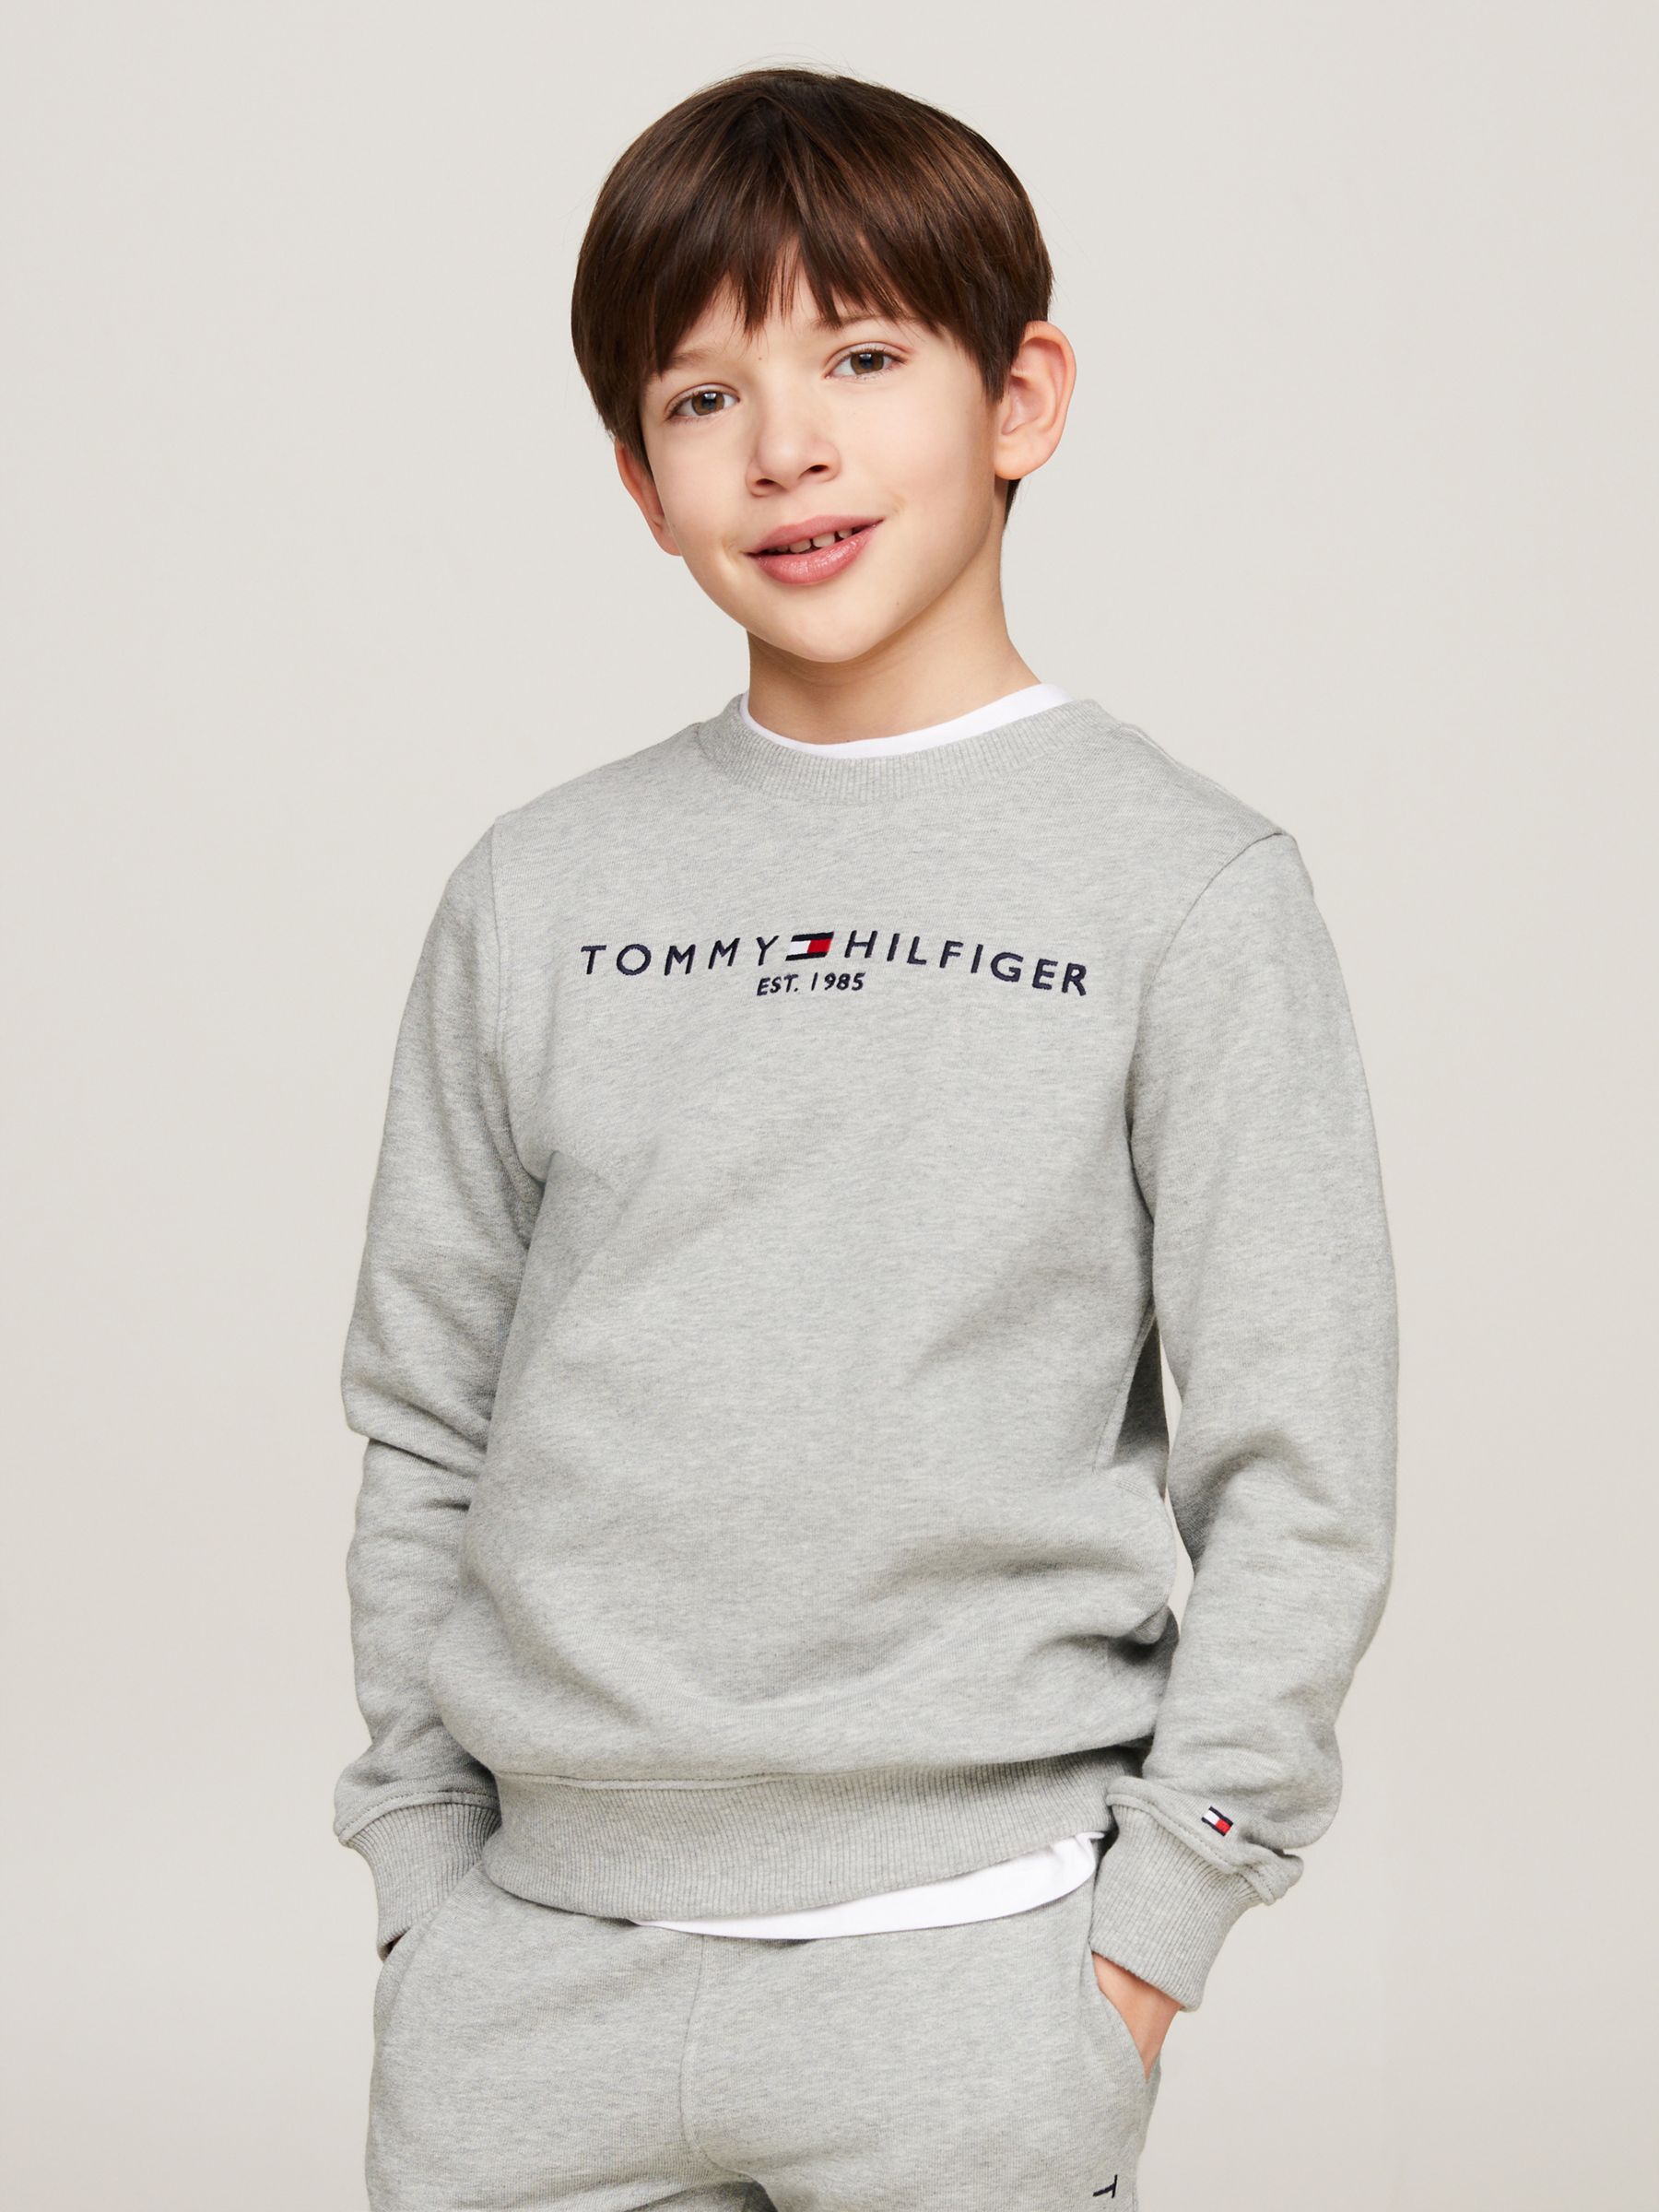 Tommy Hilfiger Kids\' Organic Cotton at Light Heather Grey Partners Logo Lewis Sweatshirt, John Essential 